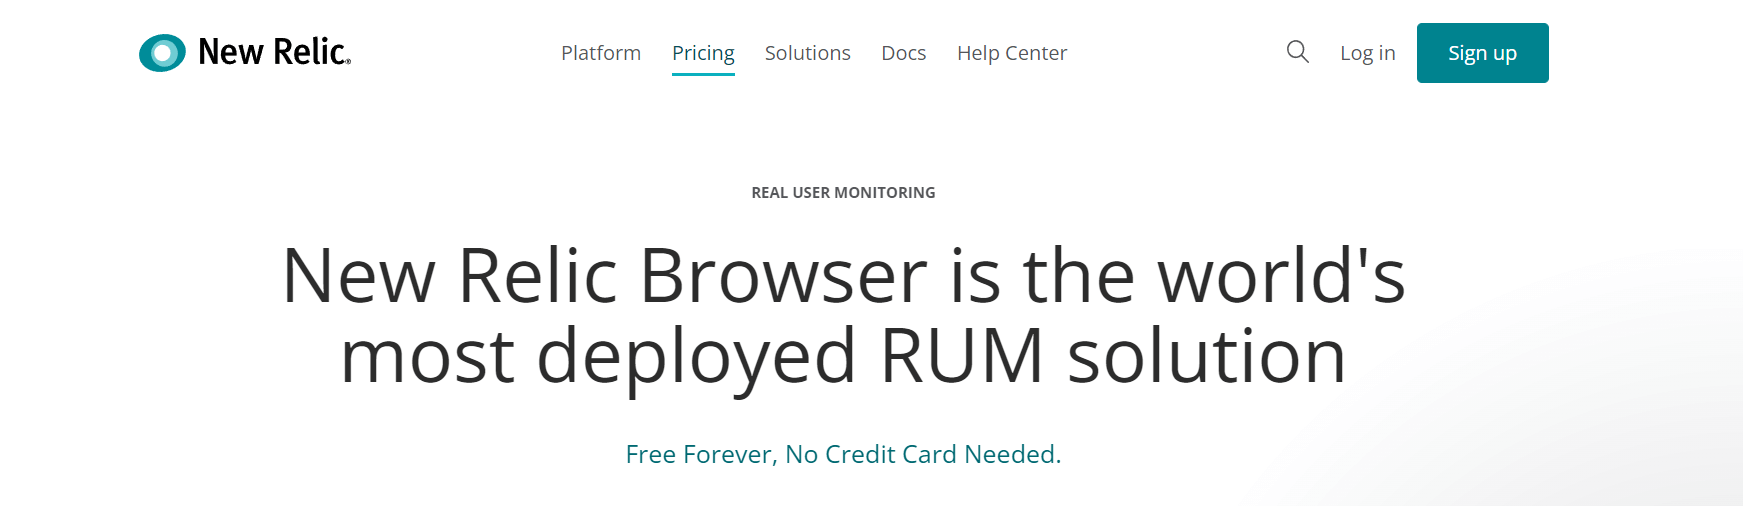 Screenshot showing New Relic's RUM